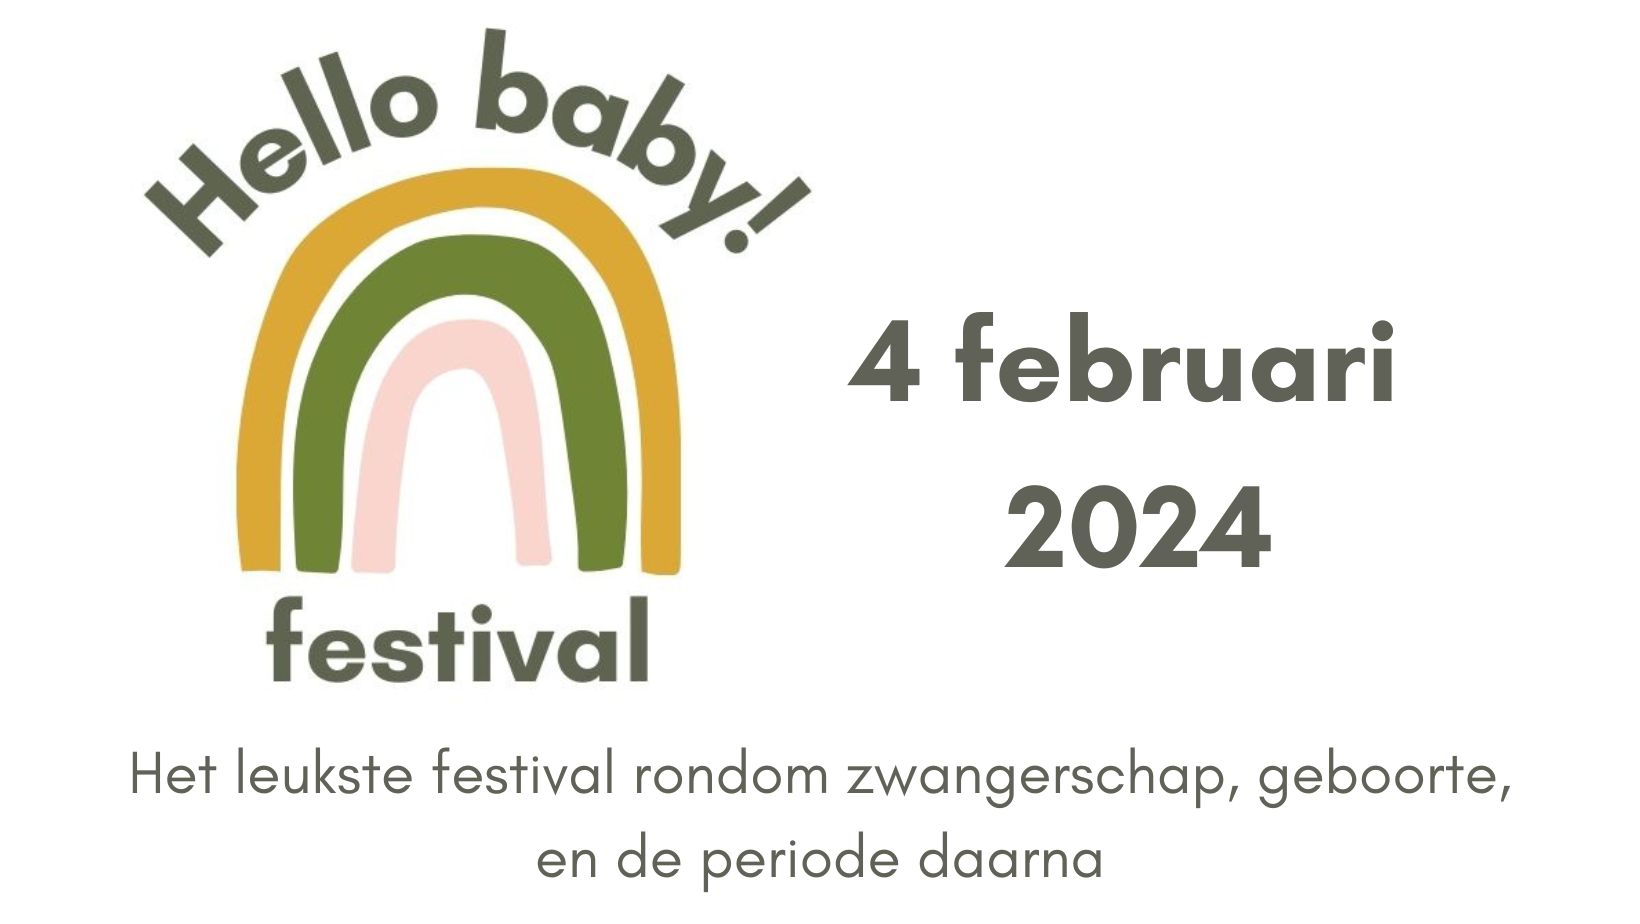 Hello baby festival